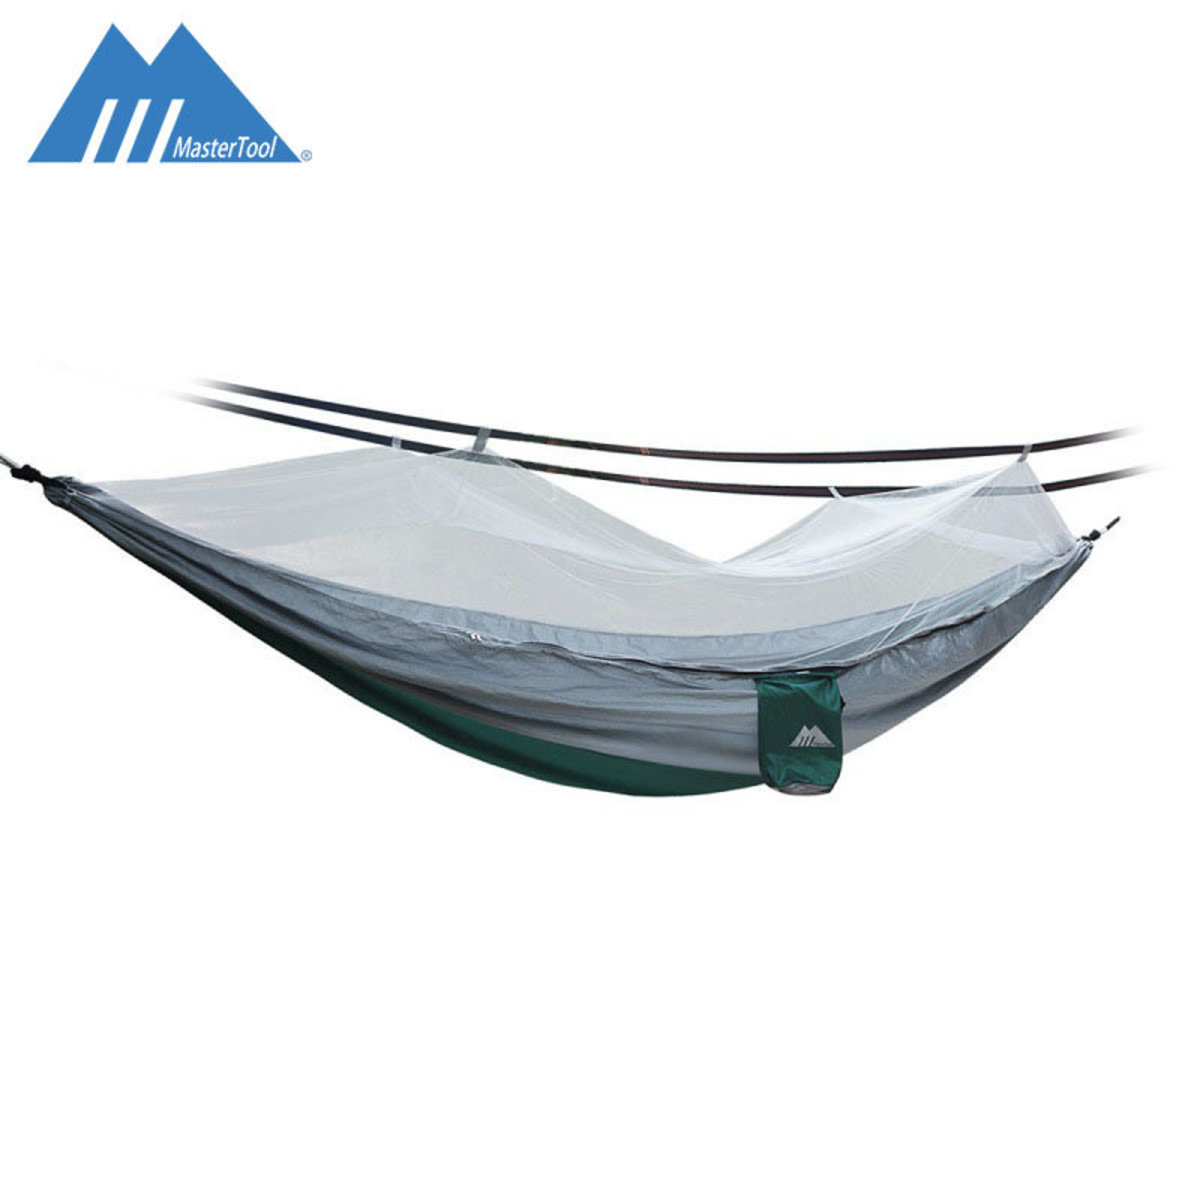 MasterTool - Green，Mosquito Net Ultralight Hammock Sleeping Mat